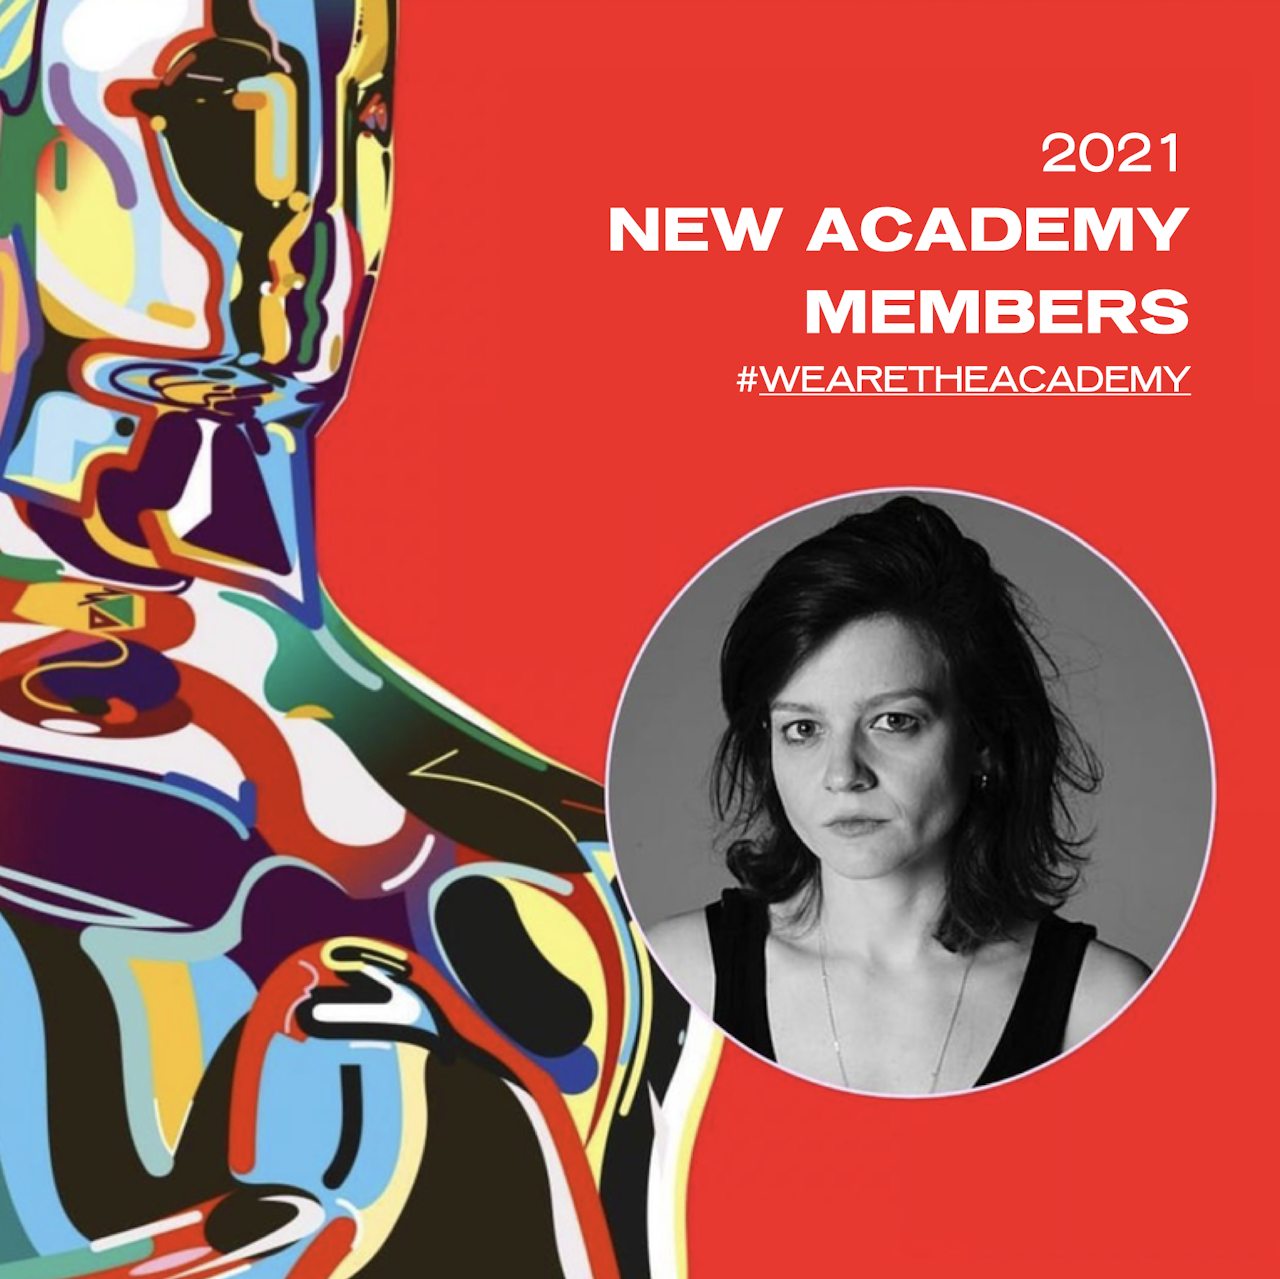 Carolina Markowicz joins the Academy!